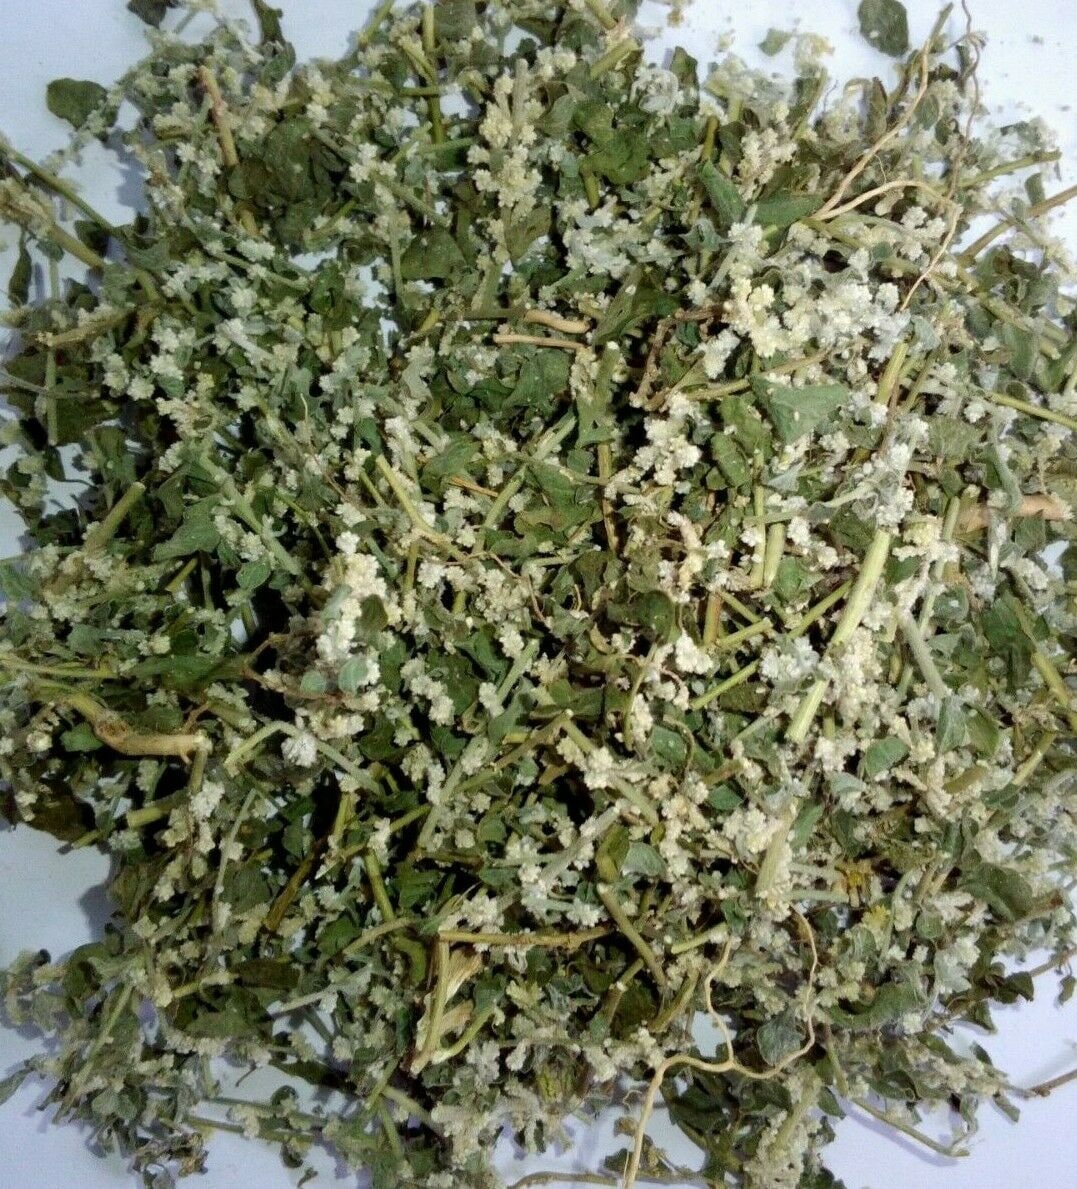 200g Natural Organic Polpala Herbal Tea (Aerva lanata)